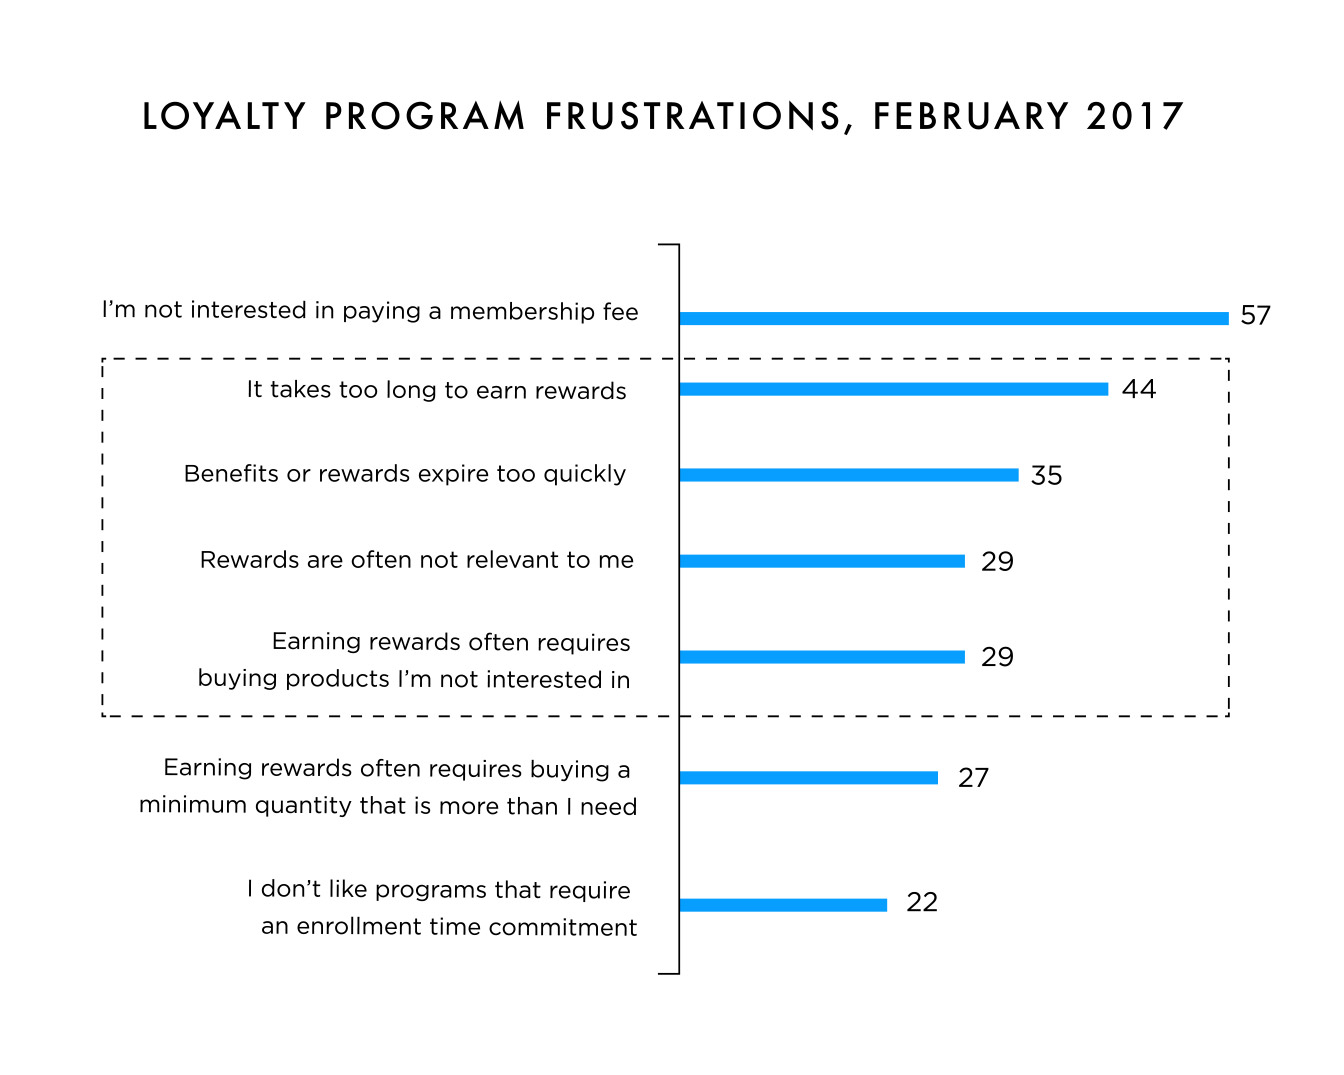 Loyalty program frustrations, February 2017